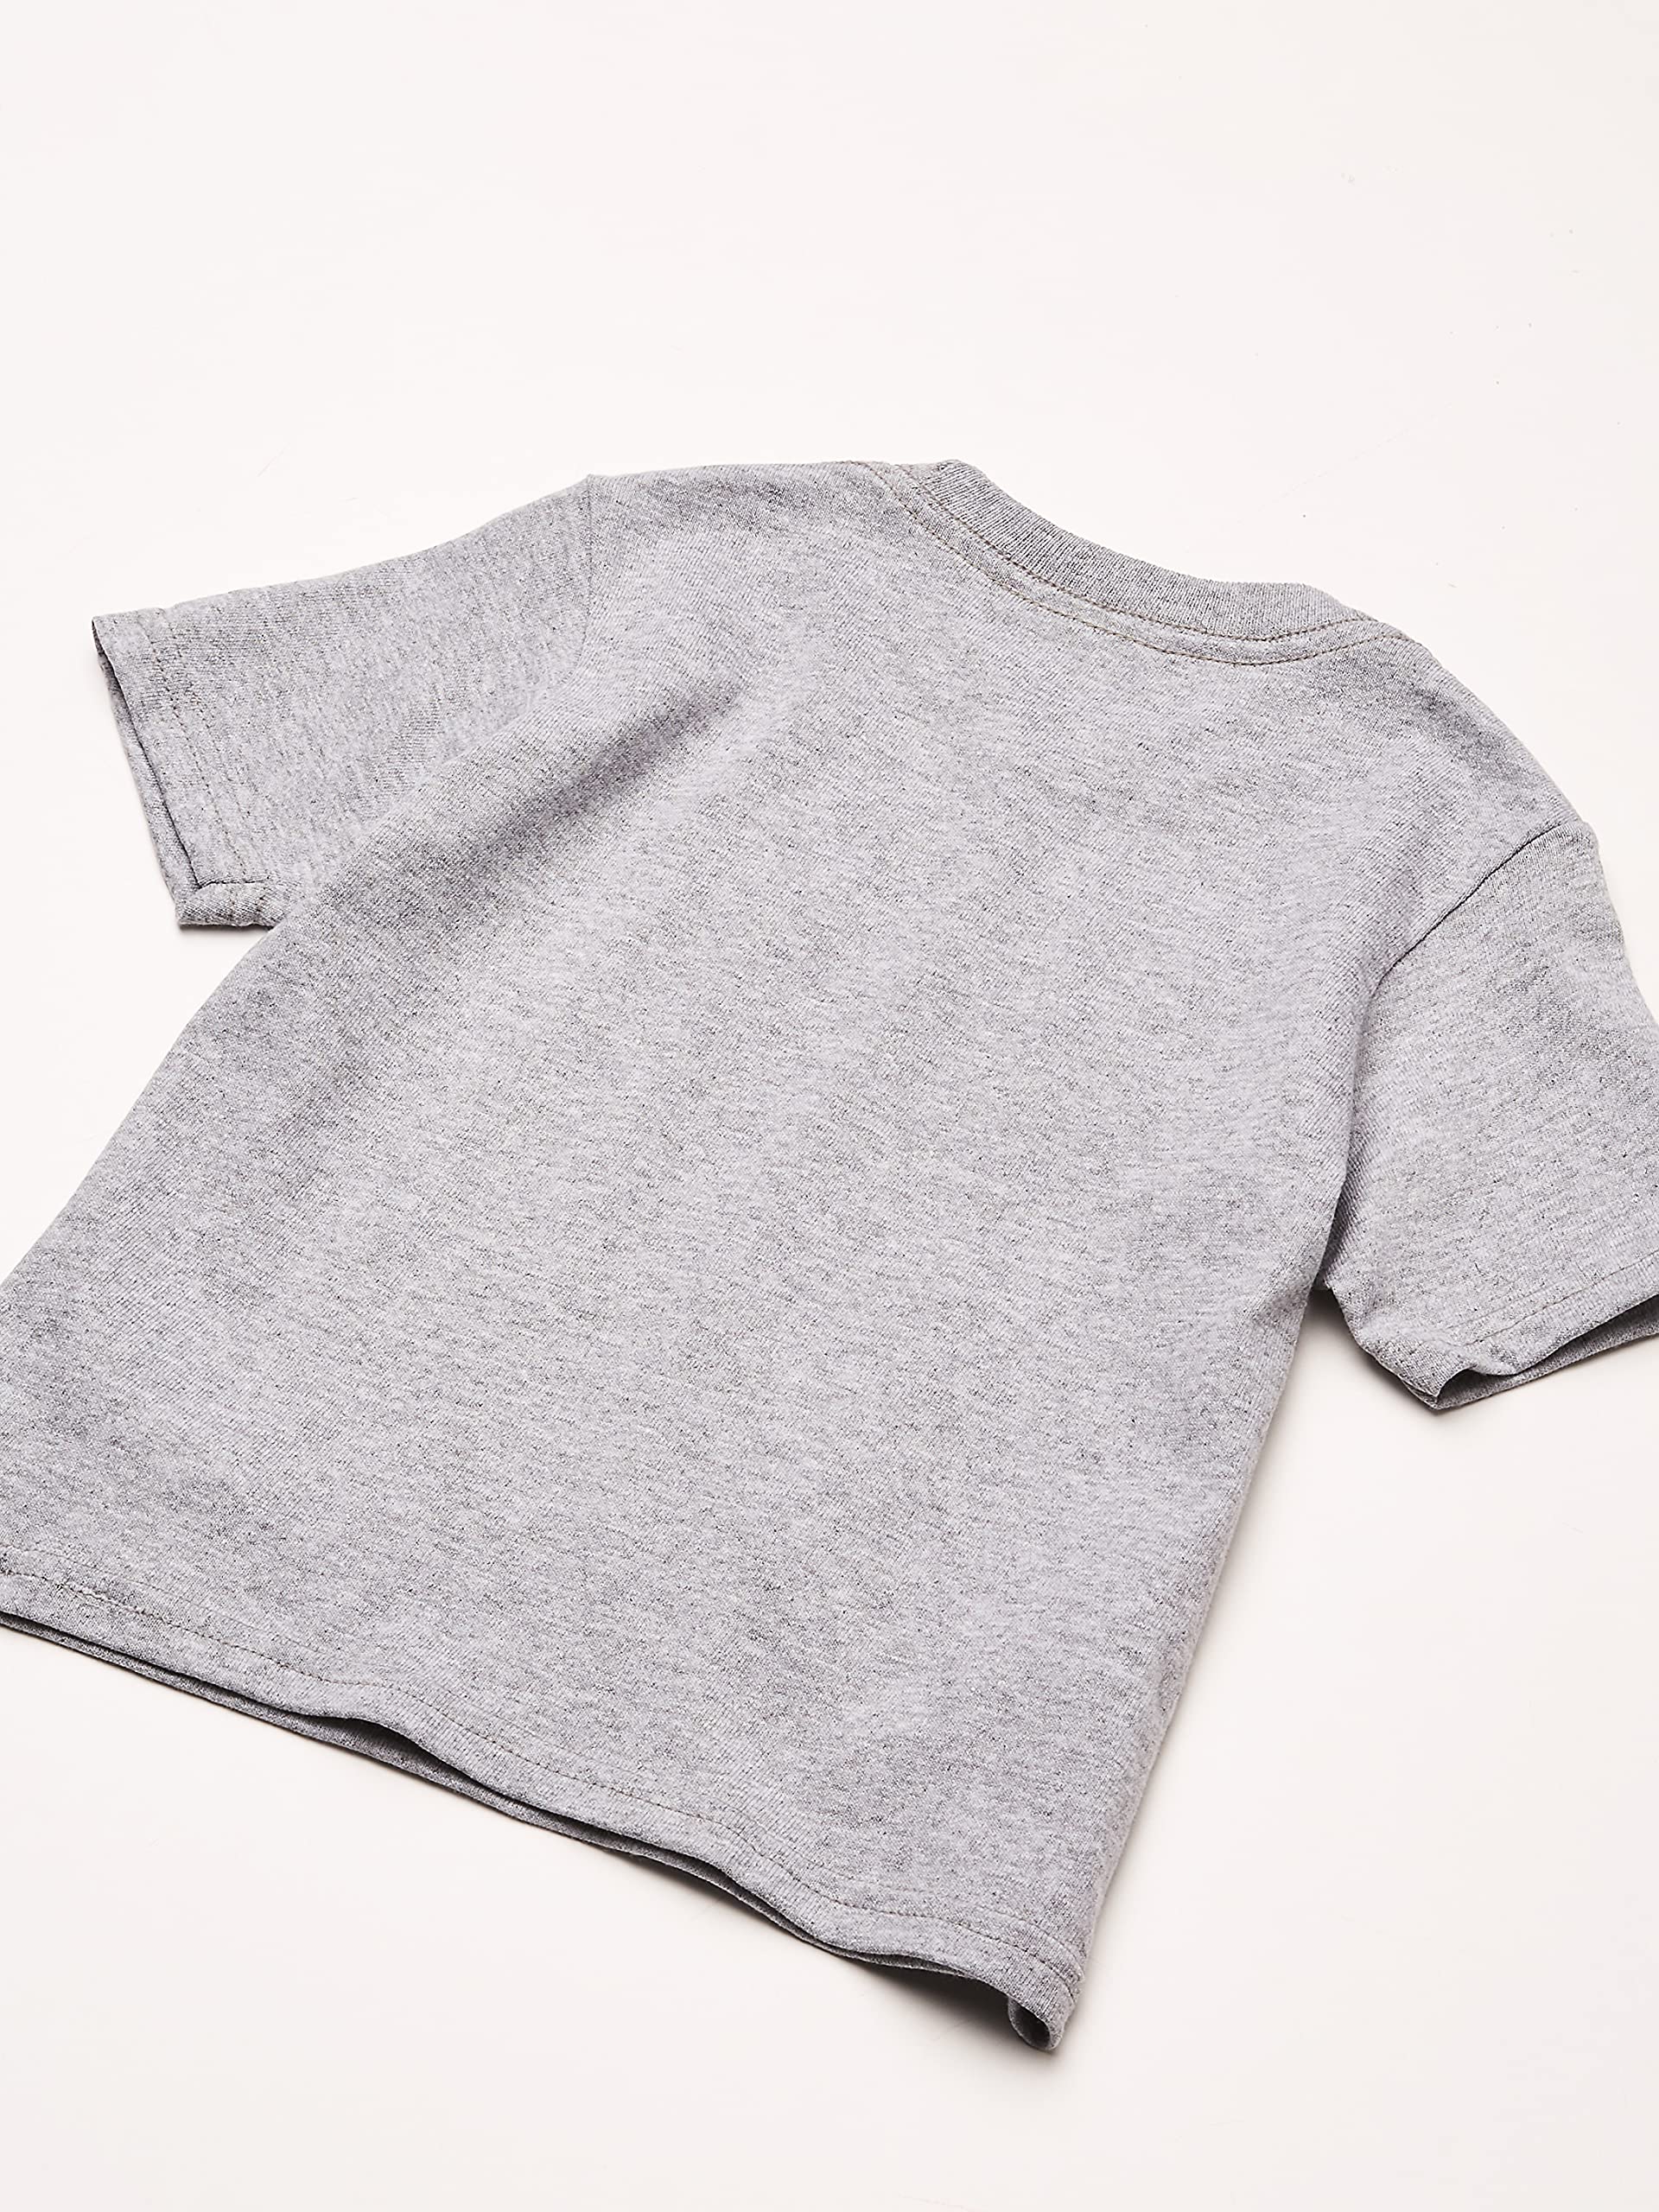 Sesame Street Boys' Short Sleeve T-Shirt Shirt